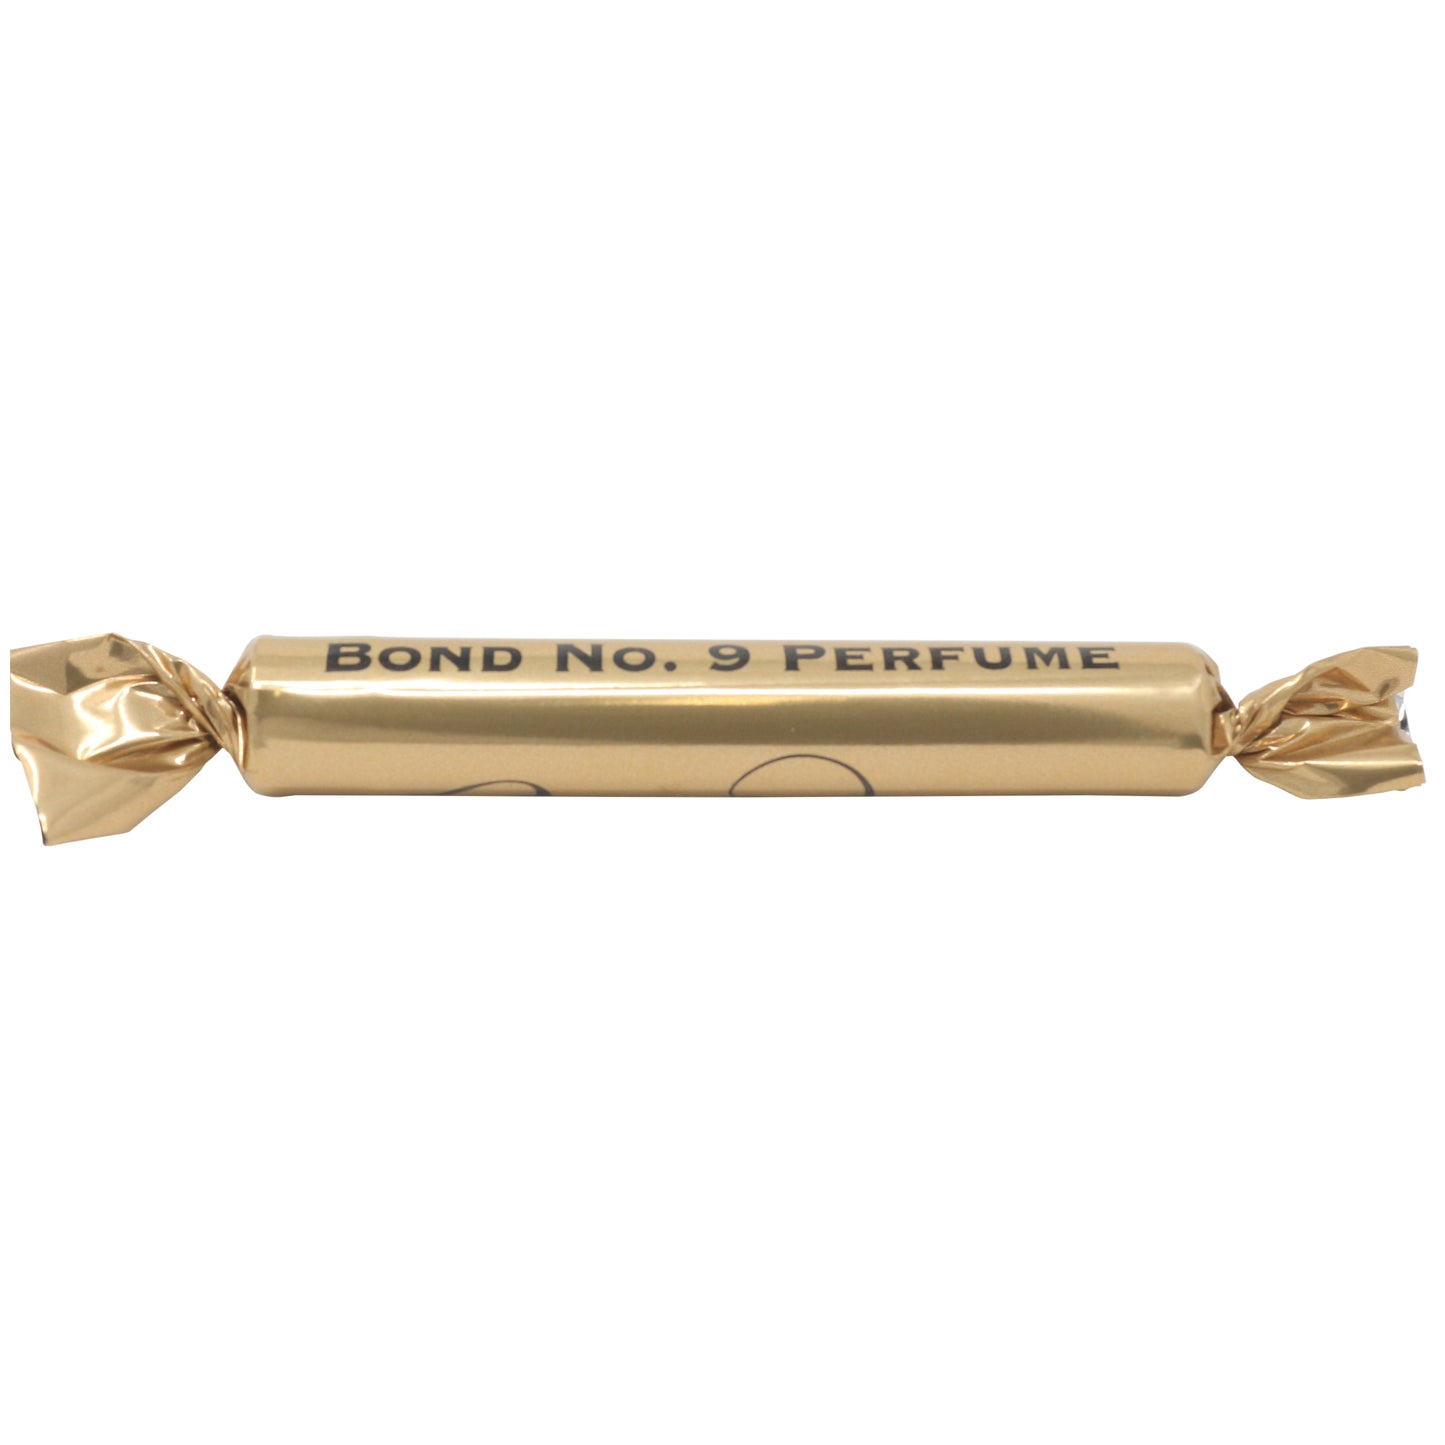 Bond No. 9 Bond No. 9 香水 1.7ml 0.054 Fl。 盎司。 官方香水样品